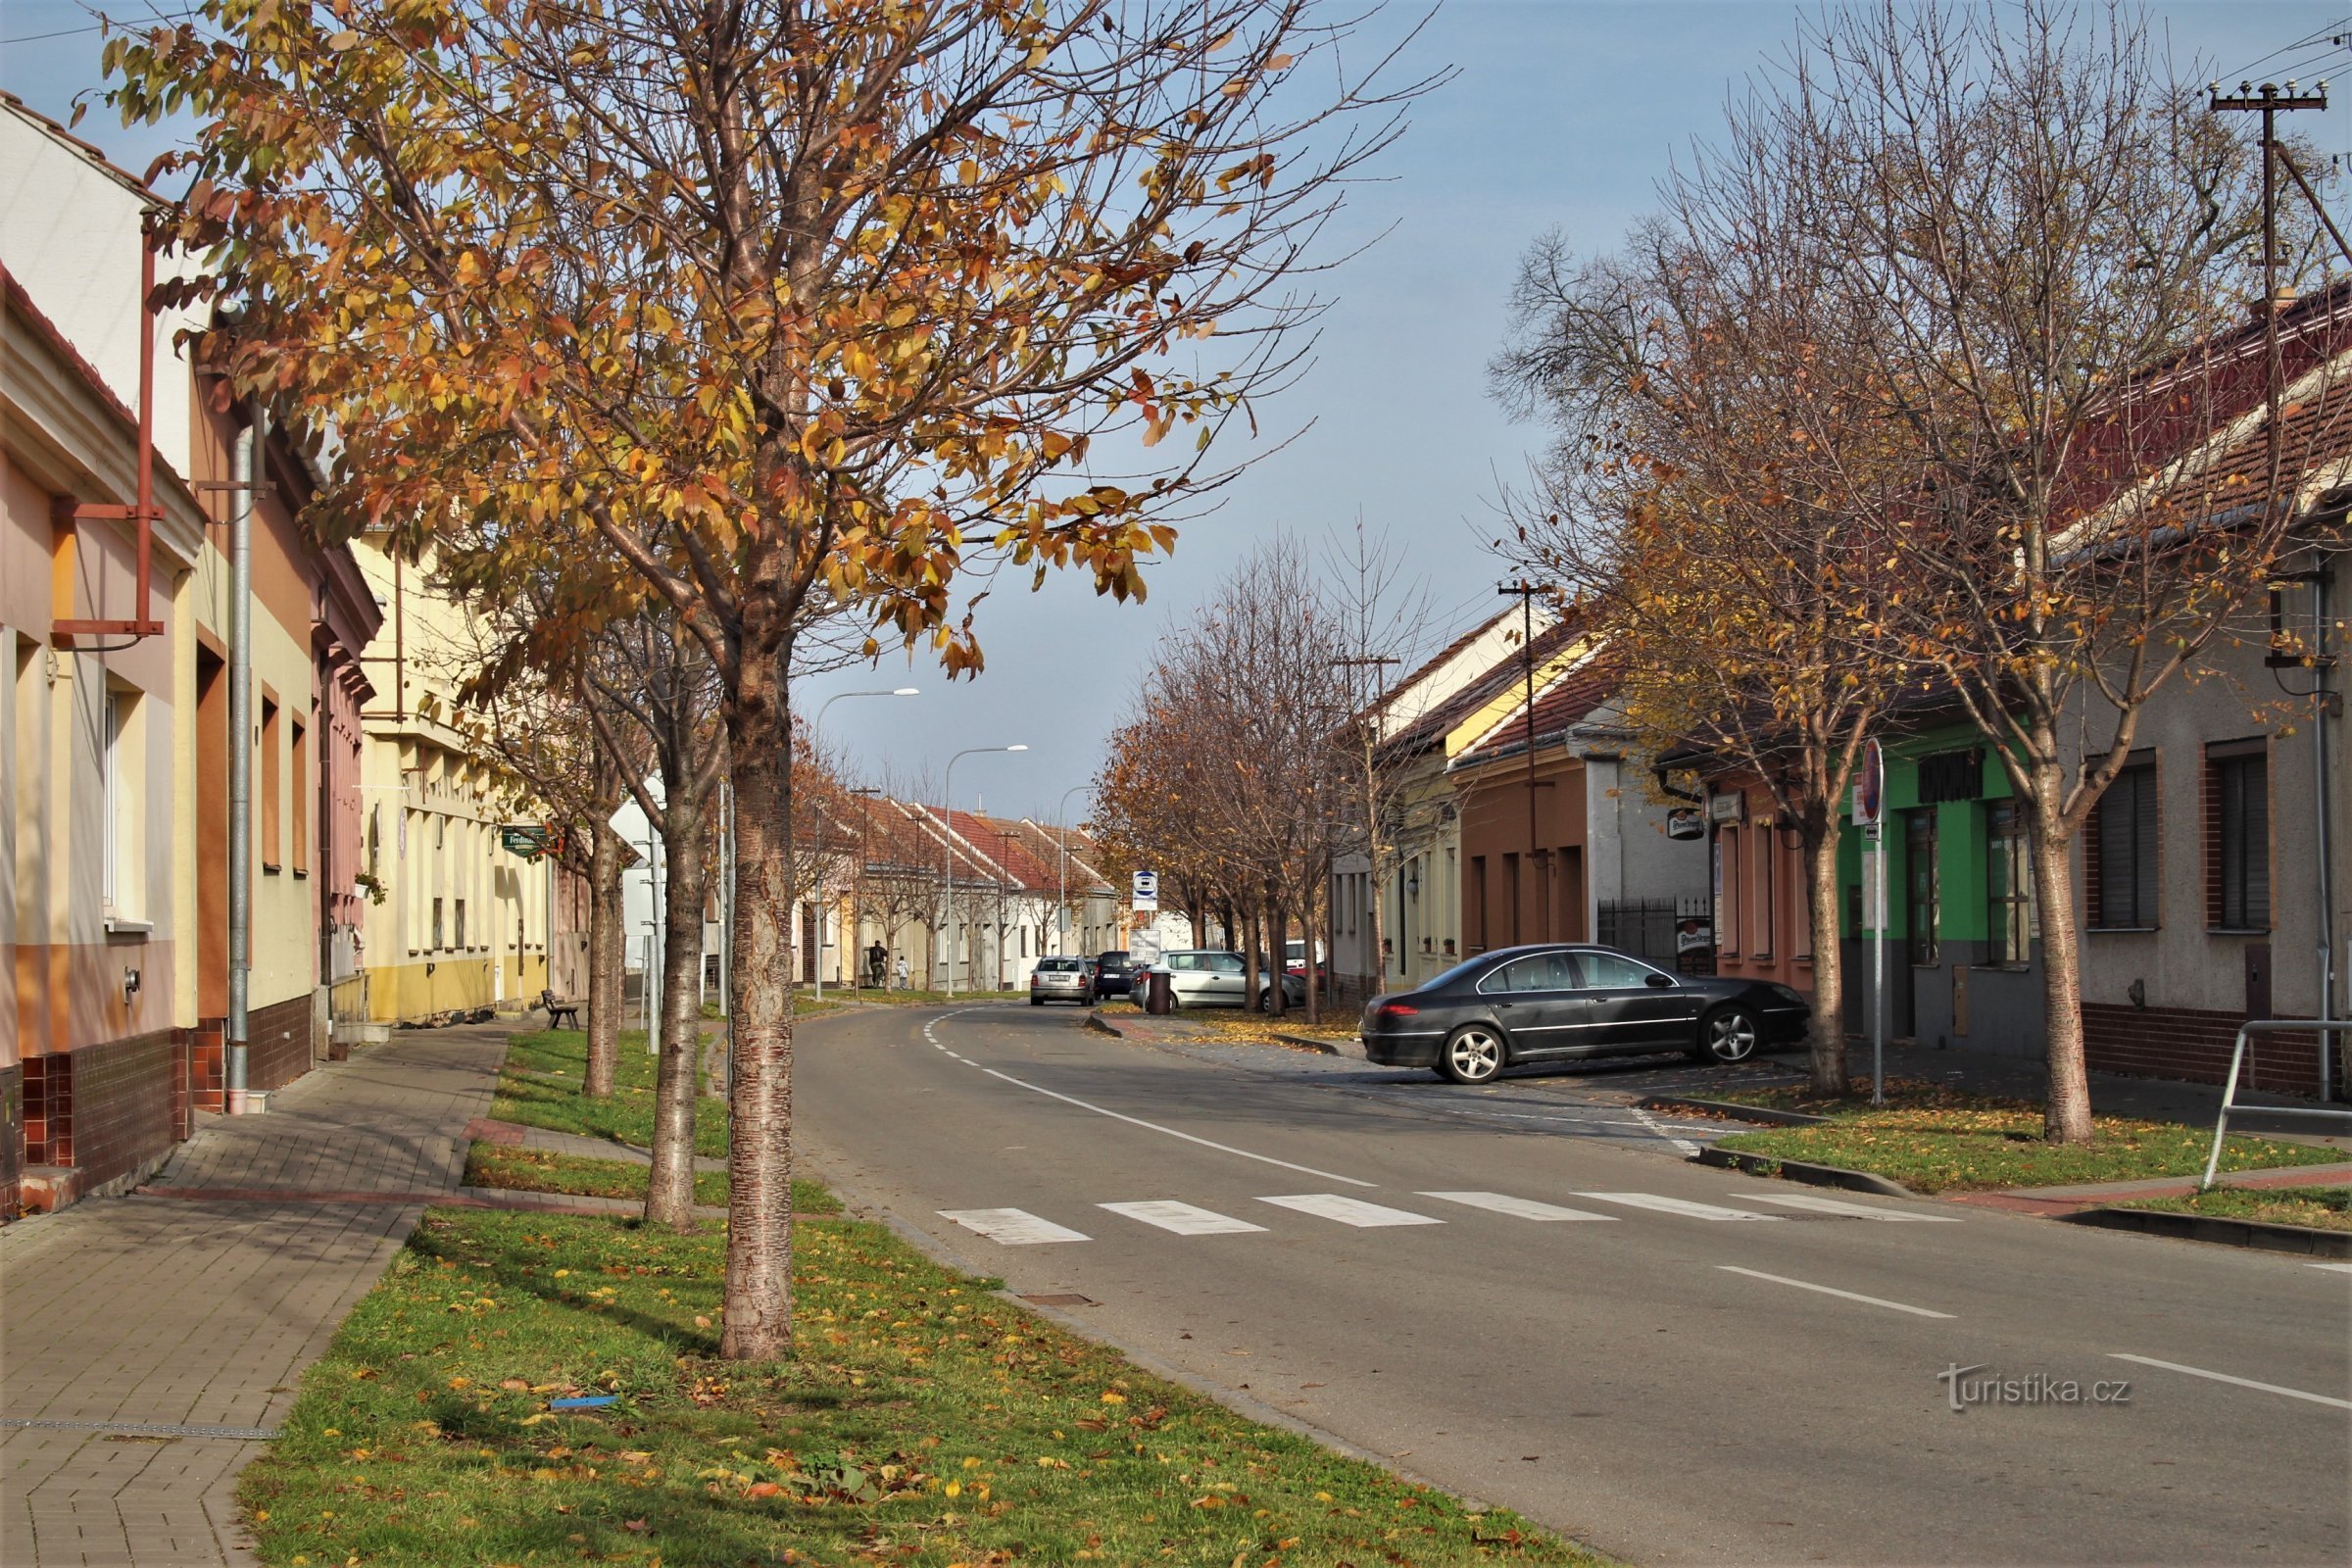 Strada principală din Podivín